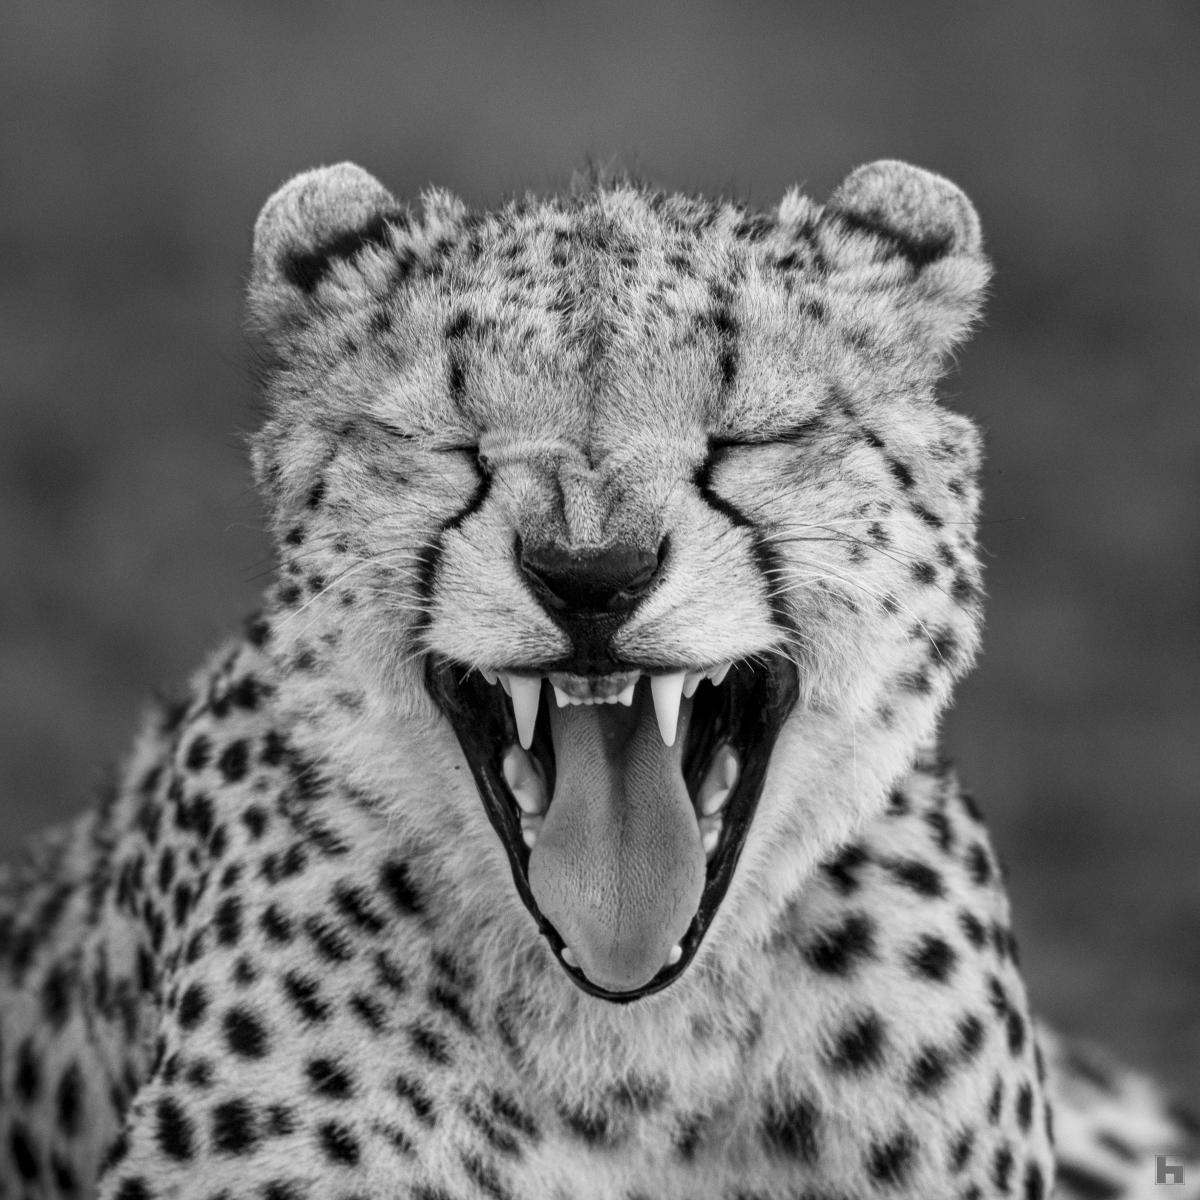 Black and white wildlife photo of a cheetah yawning.